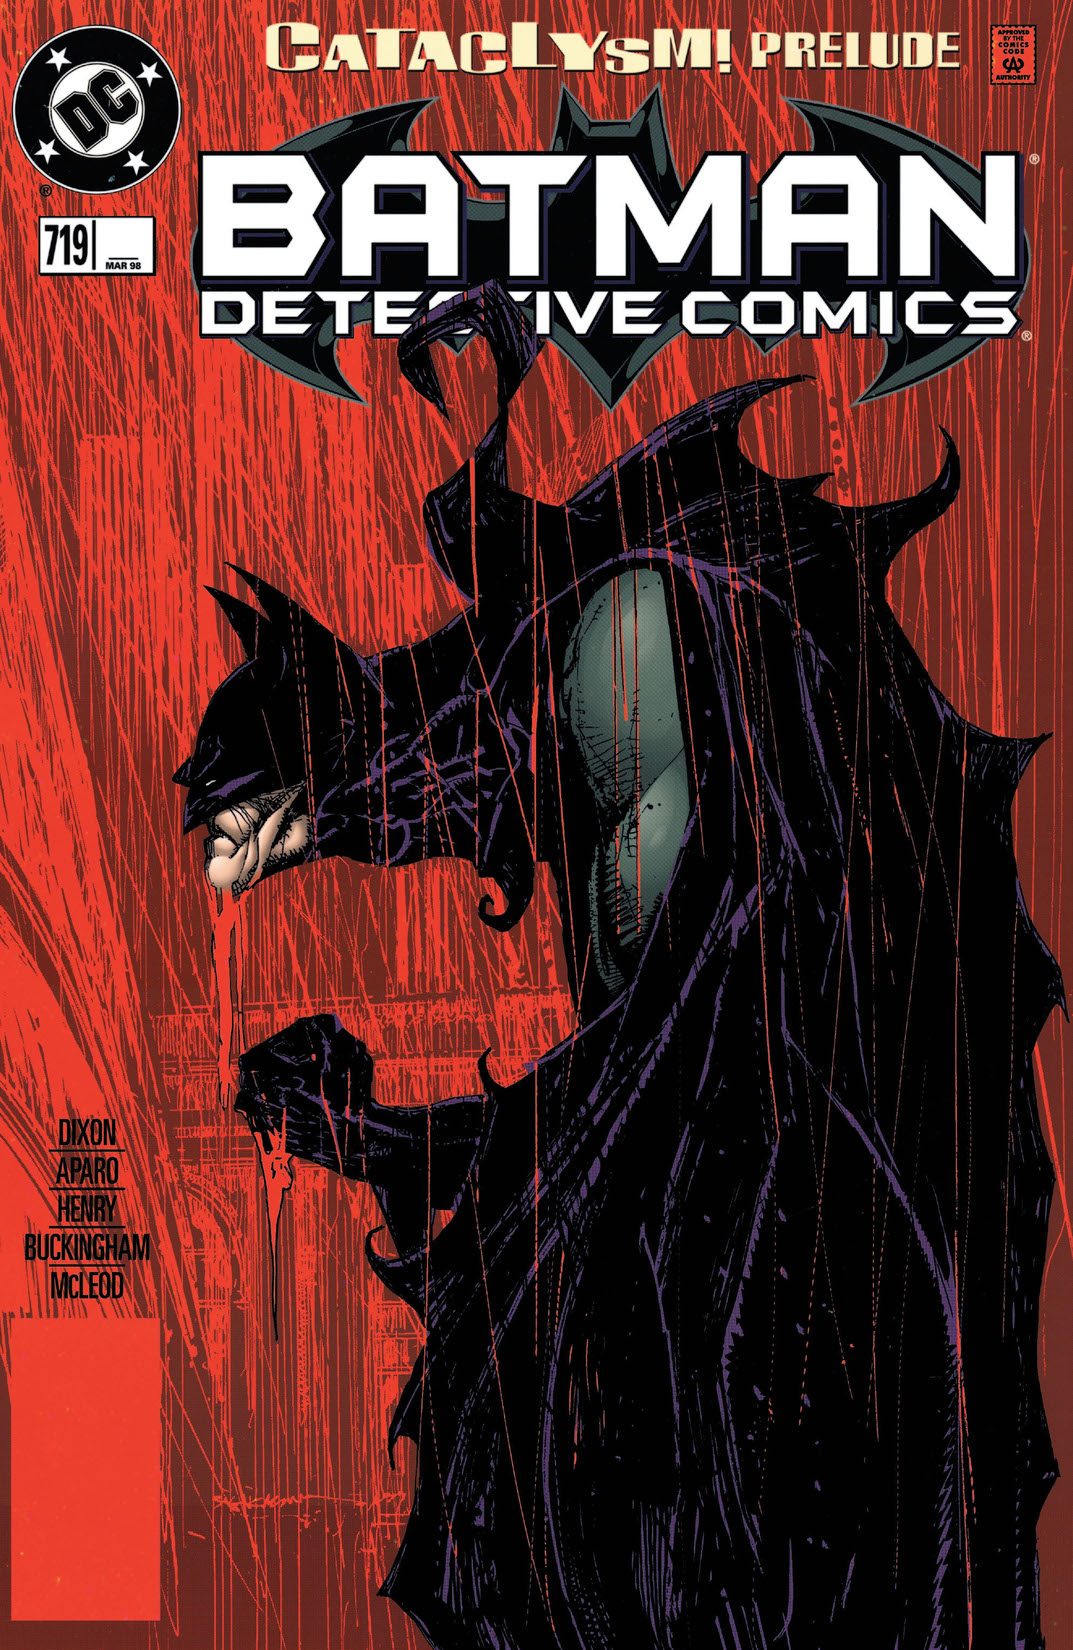 Detective Comics (1937-) #719 preview images